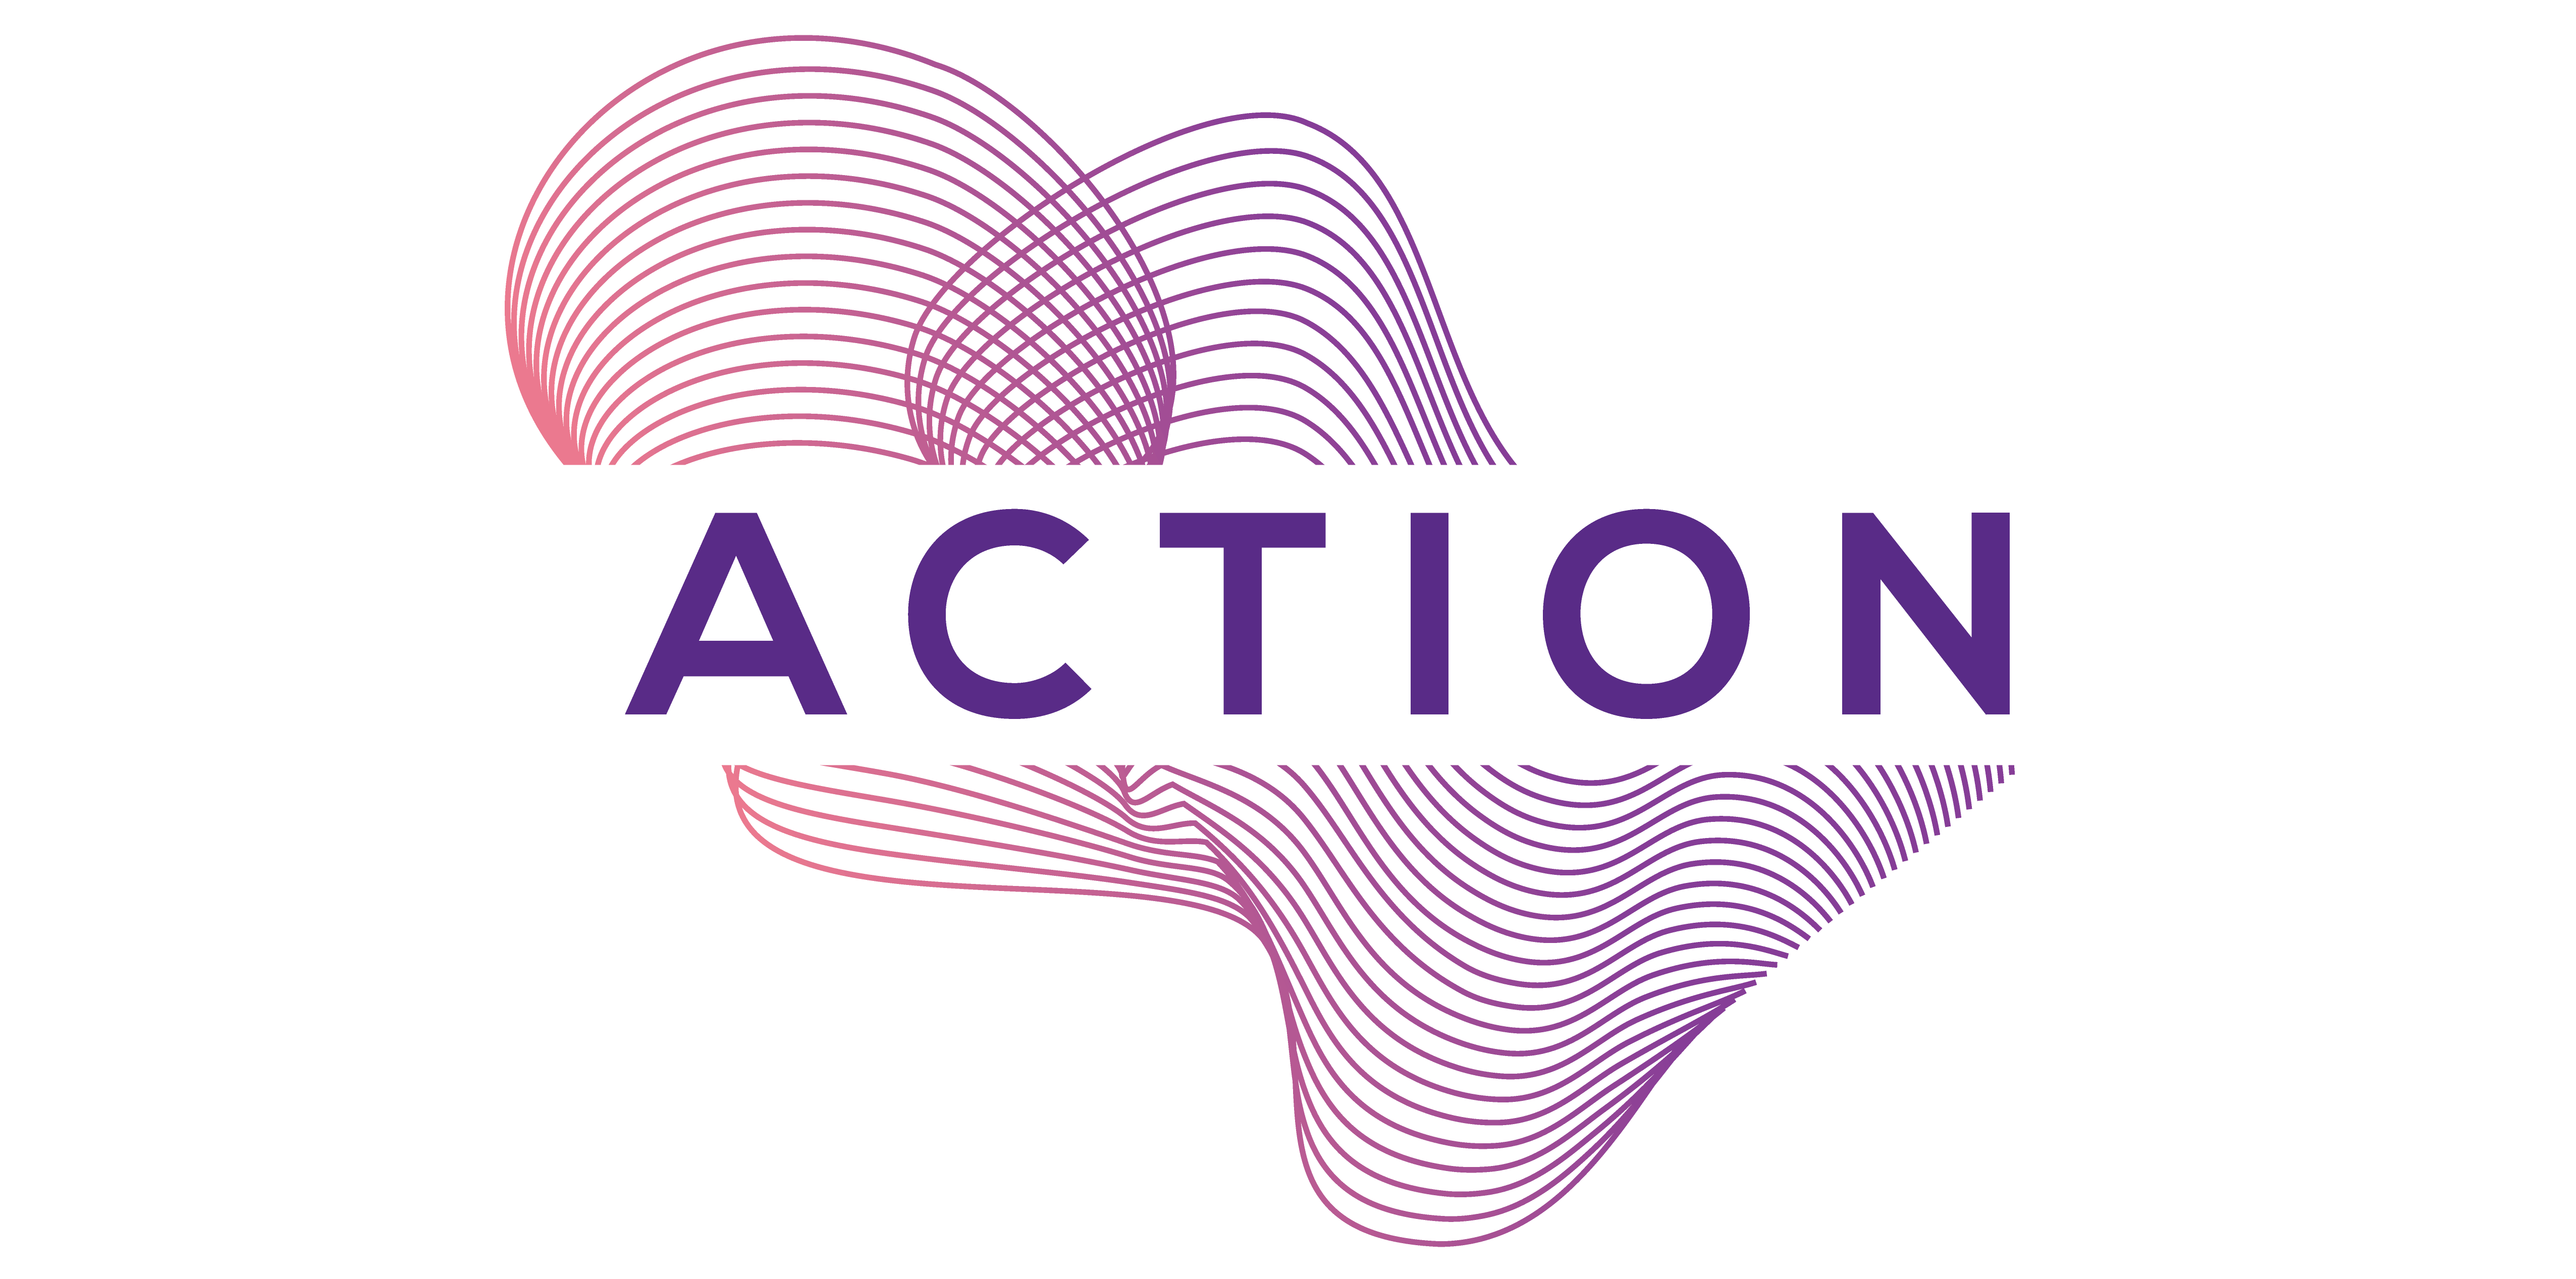 Action Studio - студия танца. Логотип